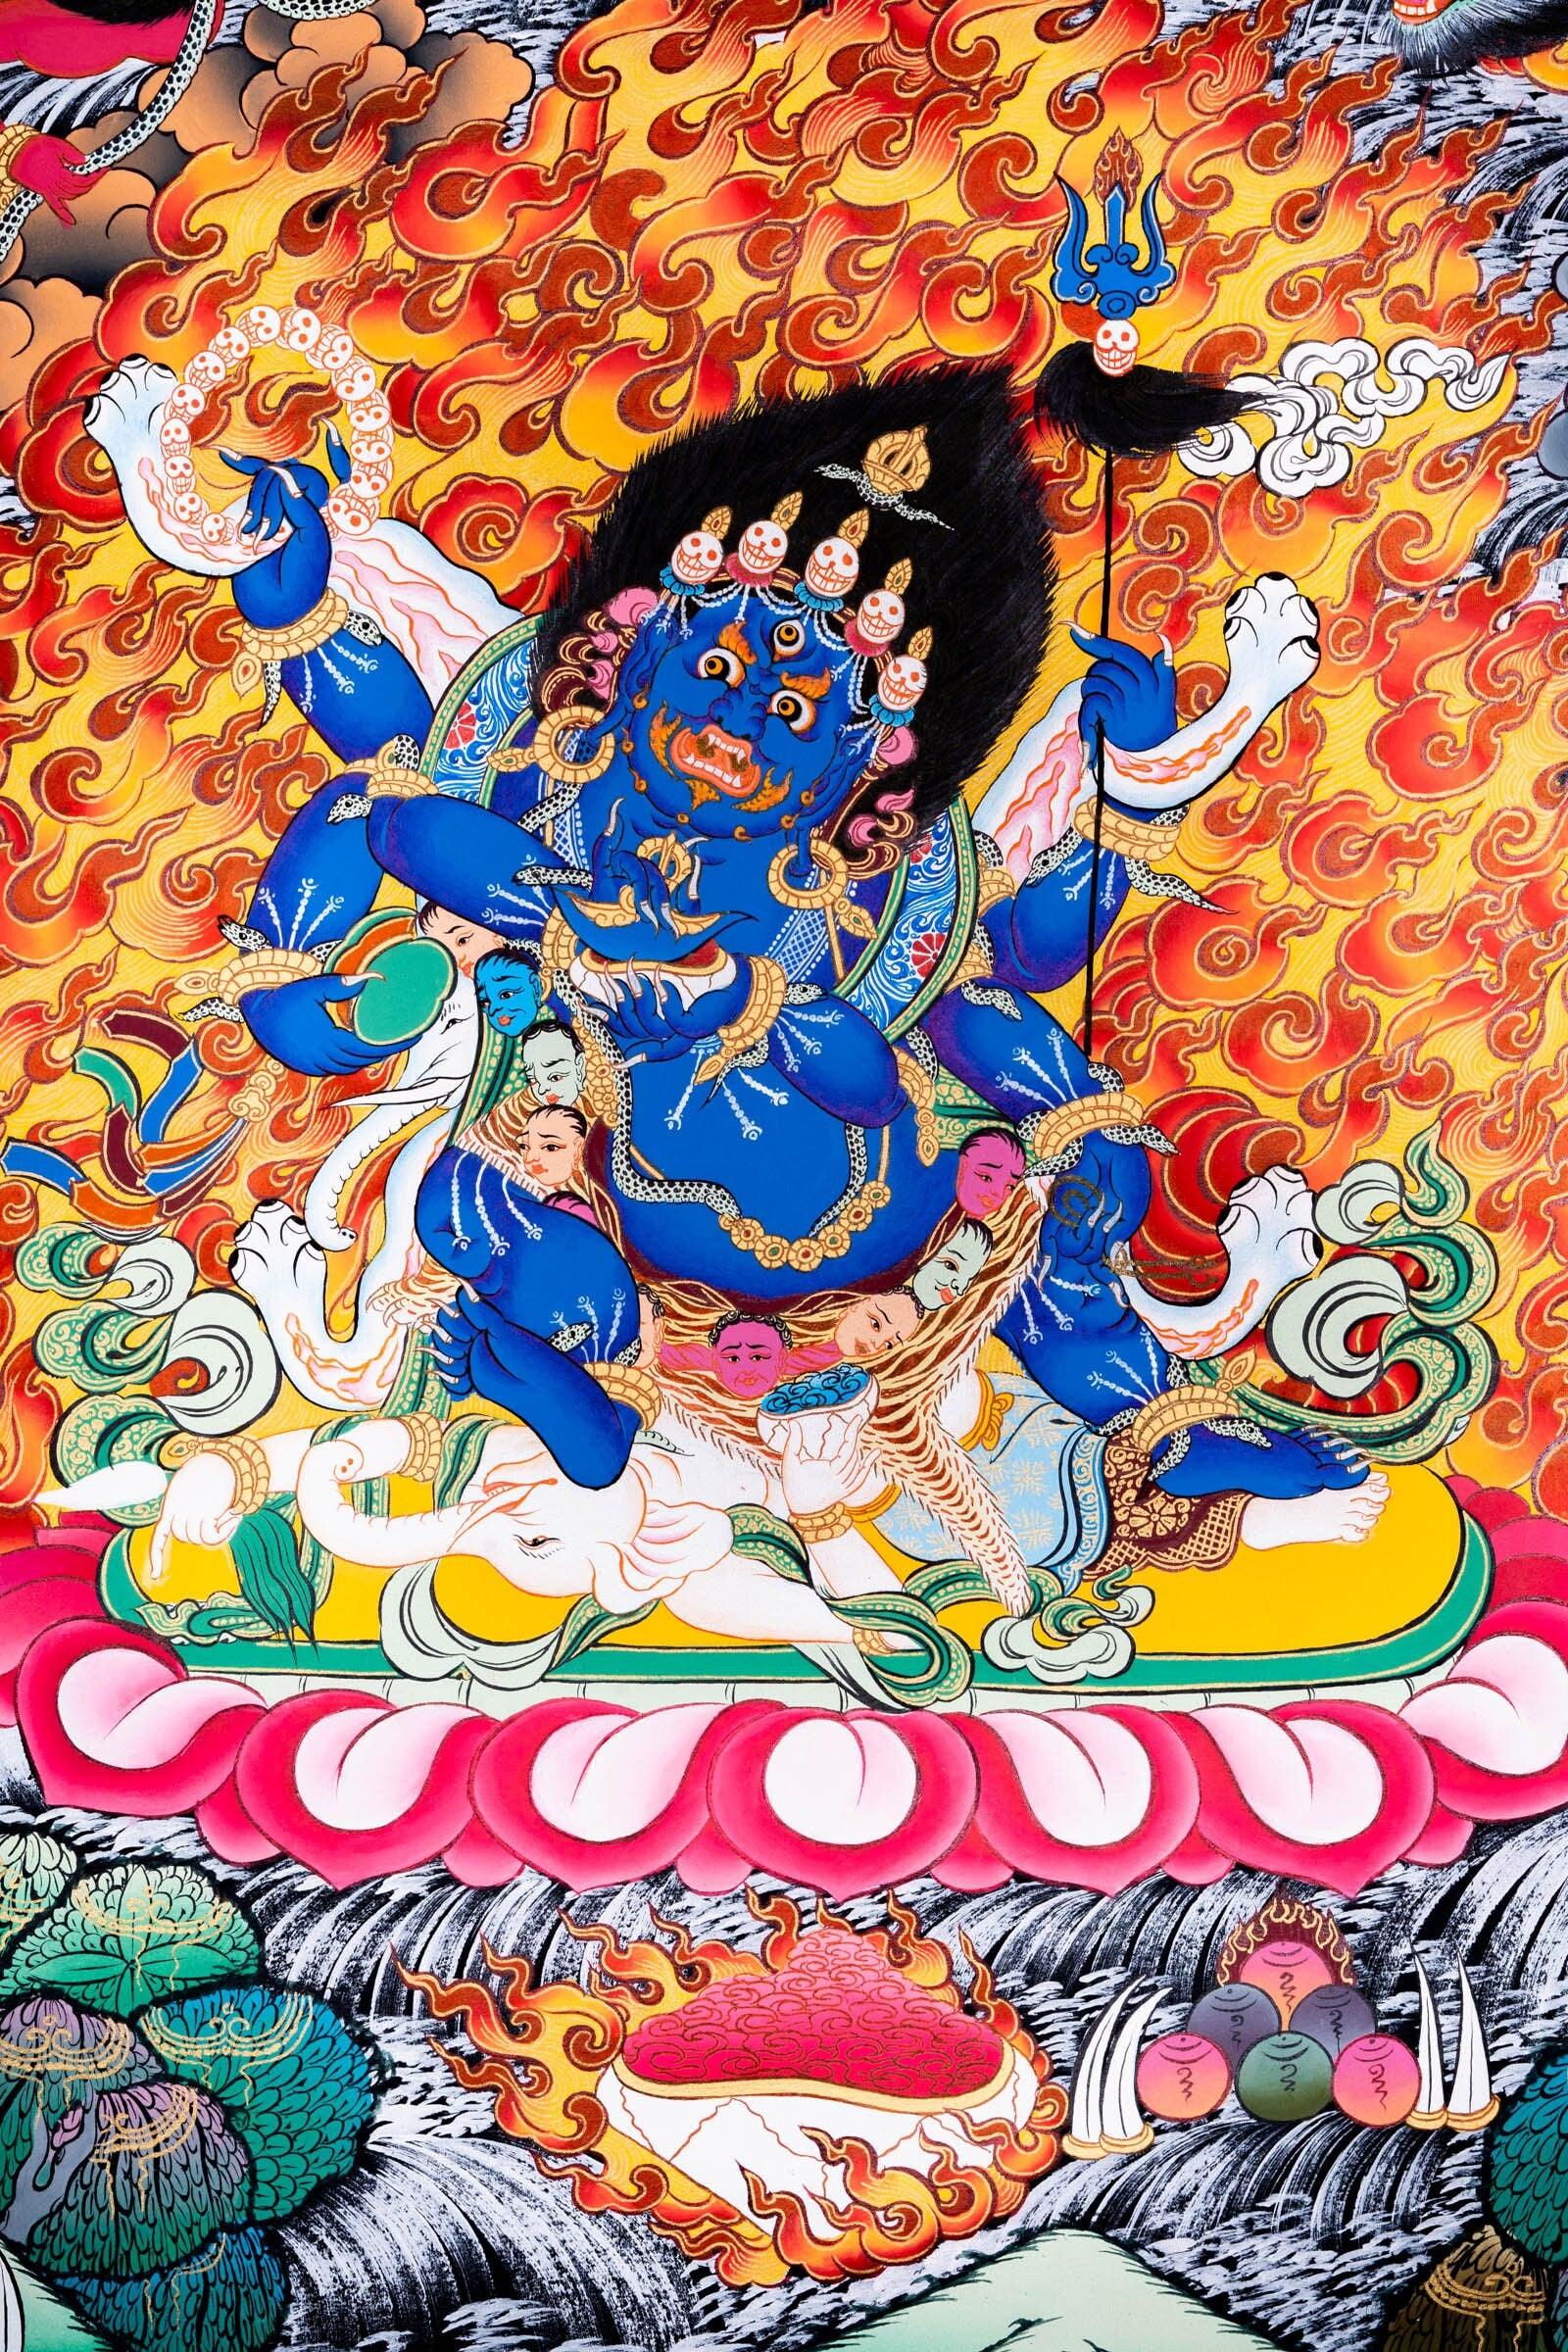 Thangka painting of Mahakala wrathful form of Avalokiteshvara in Tibetan Buddhism